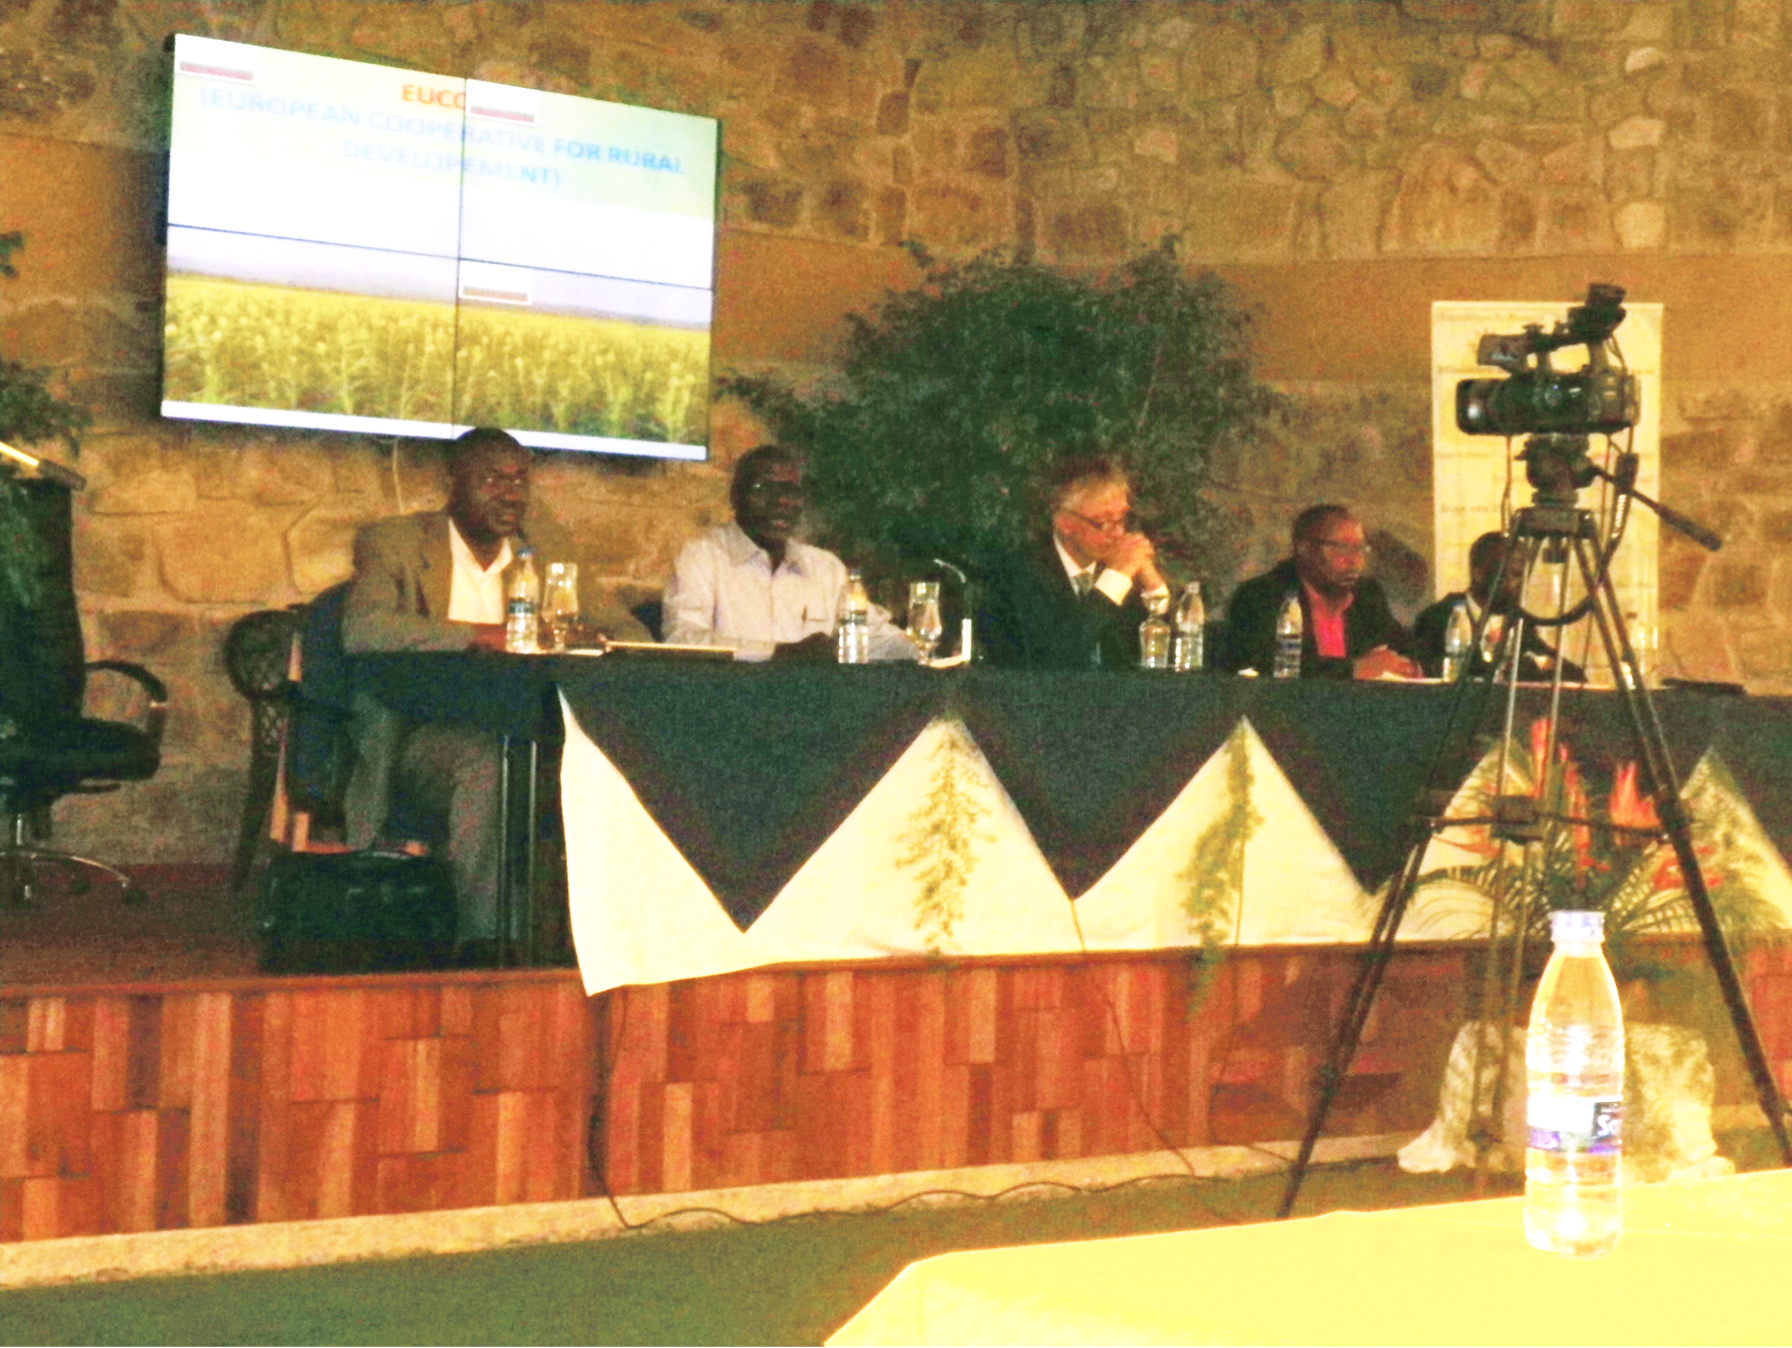 Forum panelists including IITA’s Dr Emmanuel Njukwe on the far left.